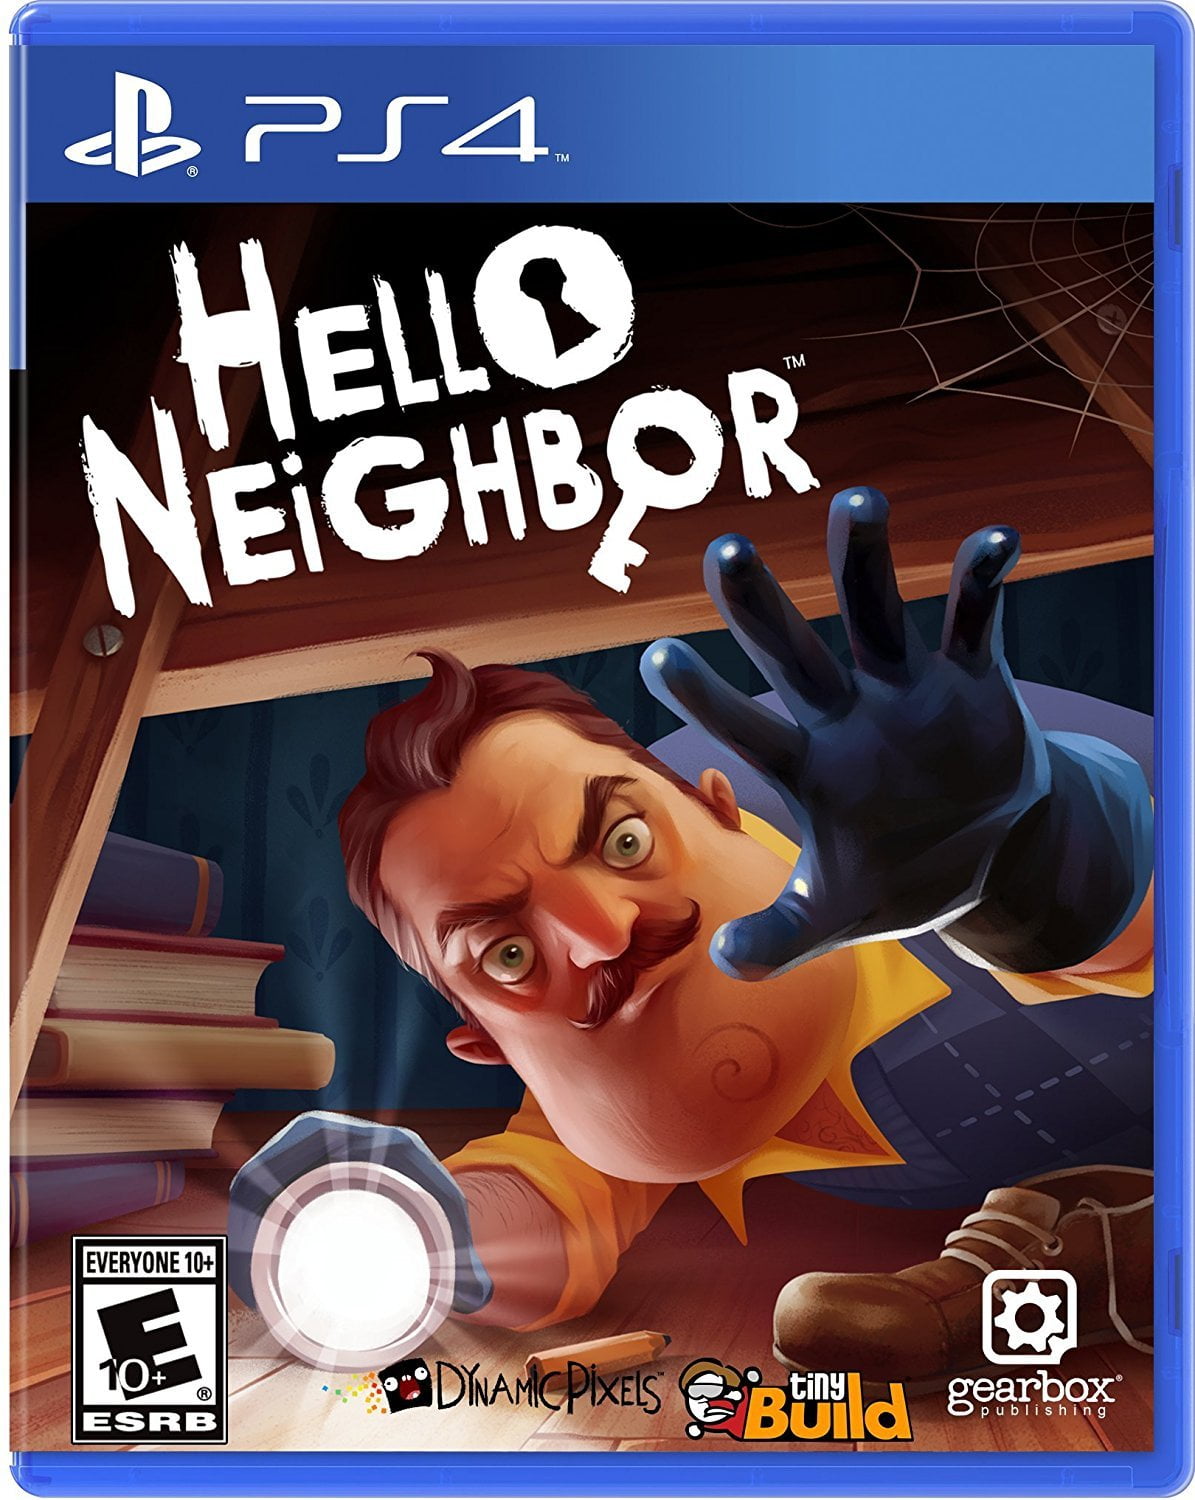 Hello Neighbor - Nintendo Switch 